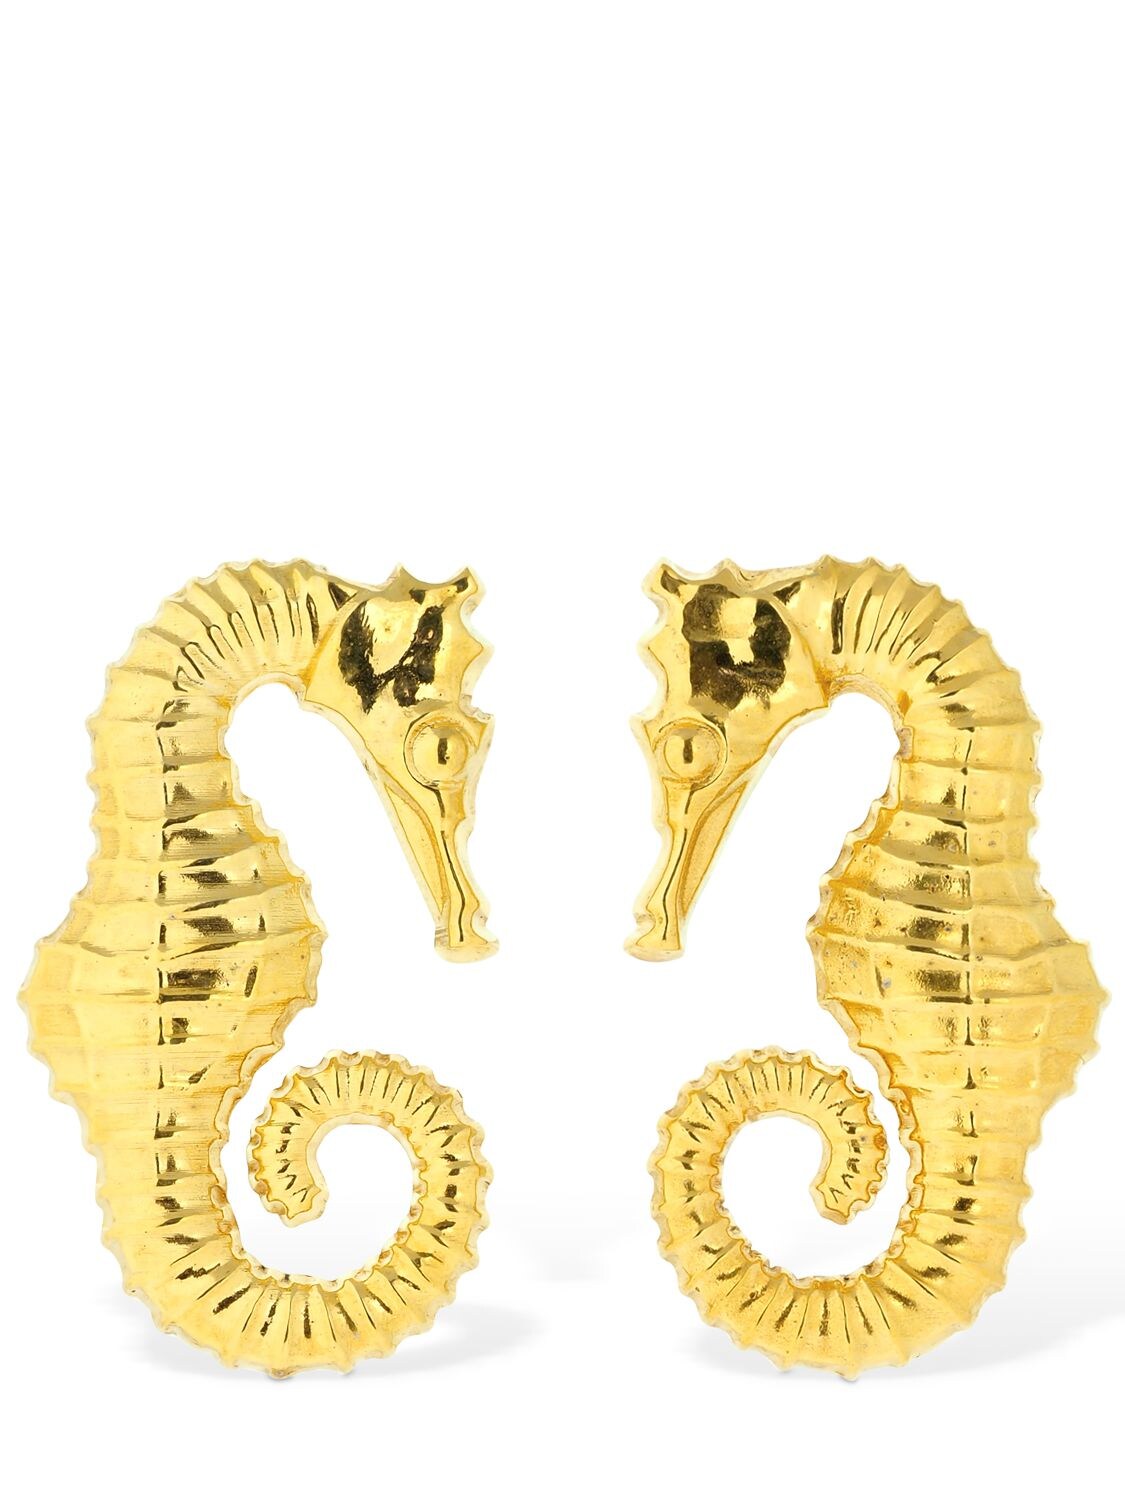 Natia X Lako Seahorse Earrings In Gold